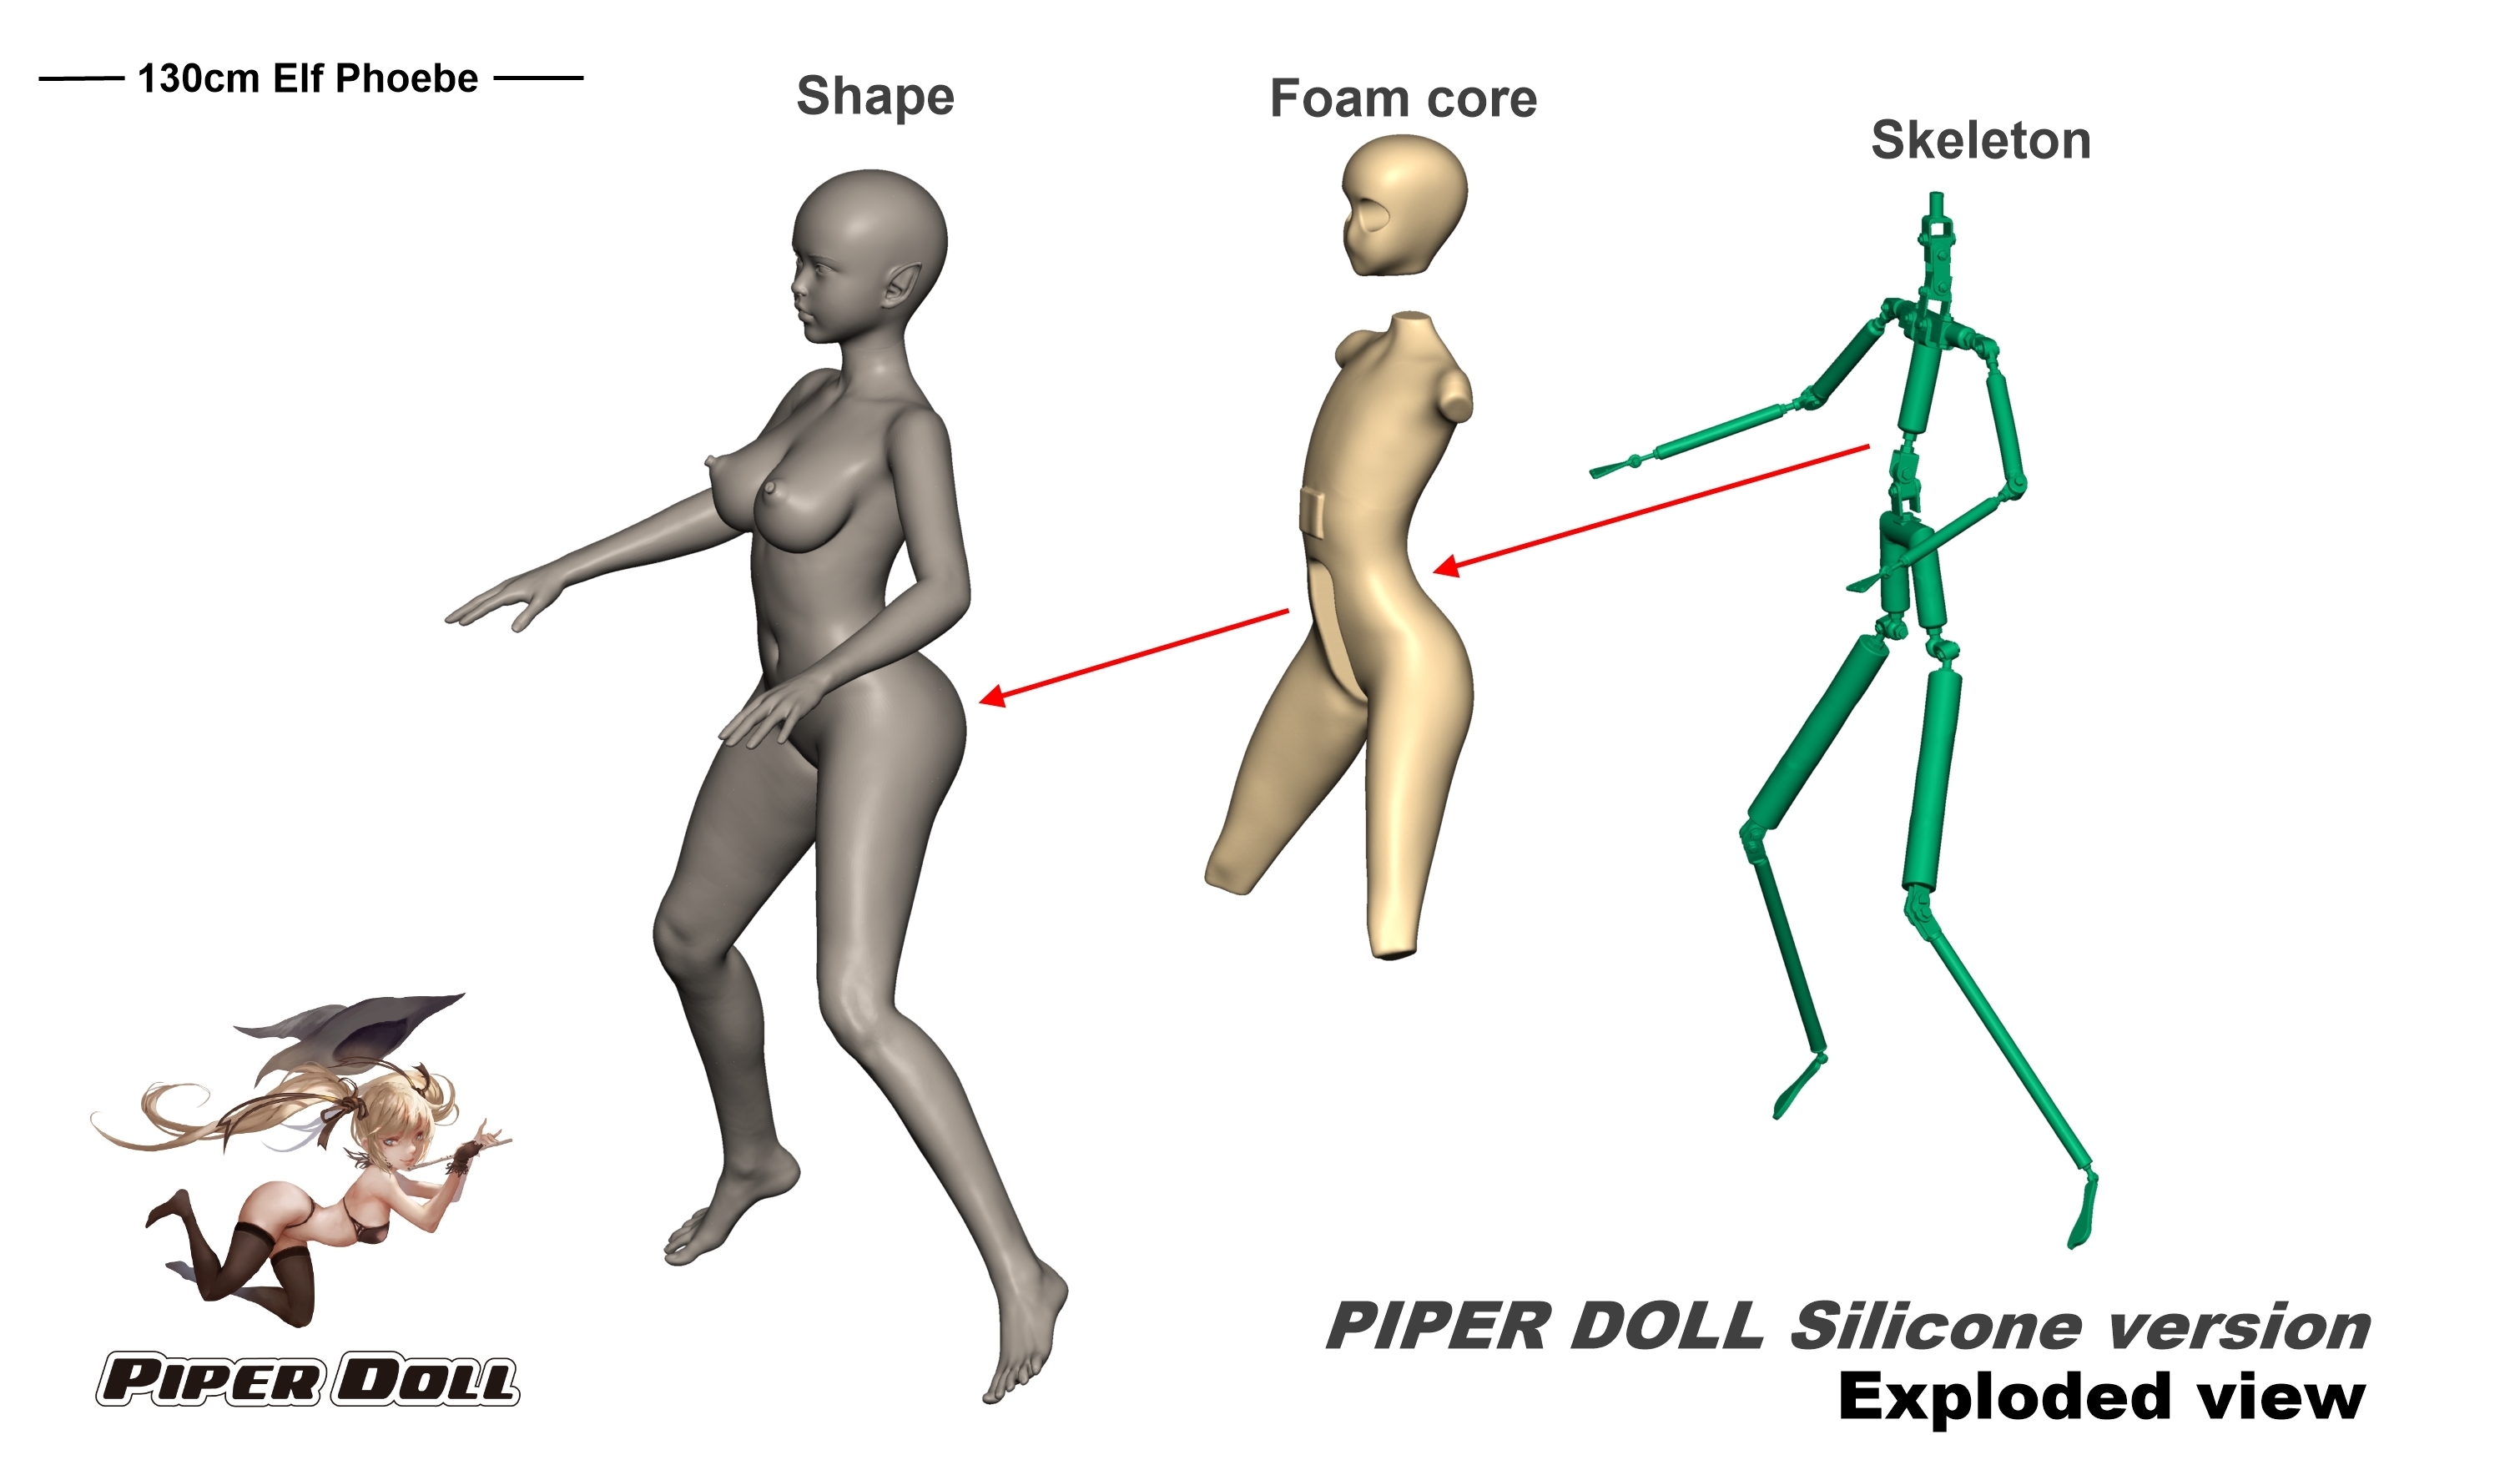 Piper Doll 130cm Silicone Phoebe Elf